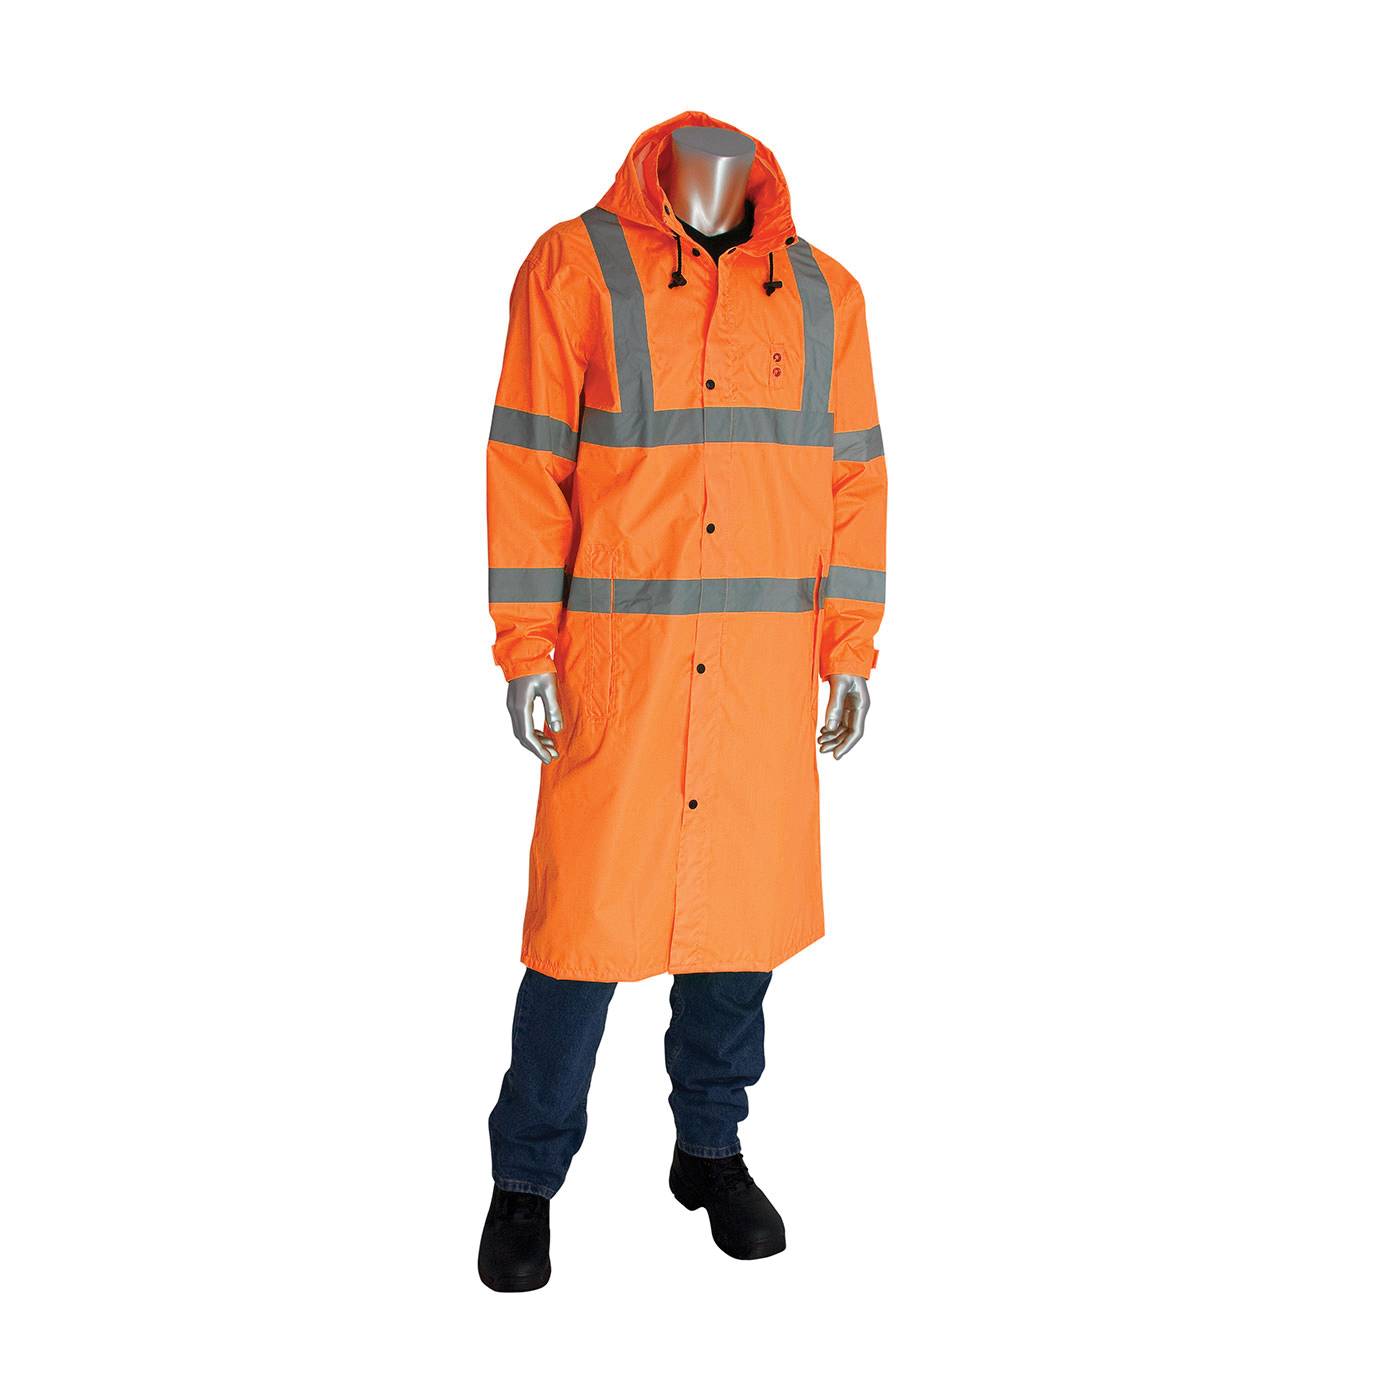 PIP® FALCON™ Viz™ 353-1048-OR/L All Purpose Waterproof Rain Coat, L, Hi-Viz Orange, 150D Polyester Coated with Polyurethane, Resists: Water, ANSI 107 Type R Class 3, Concealed Hood